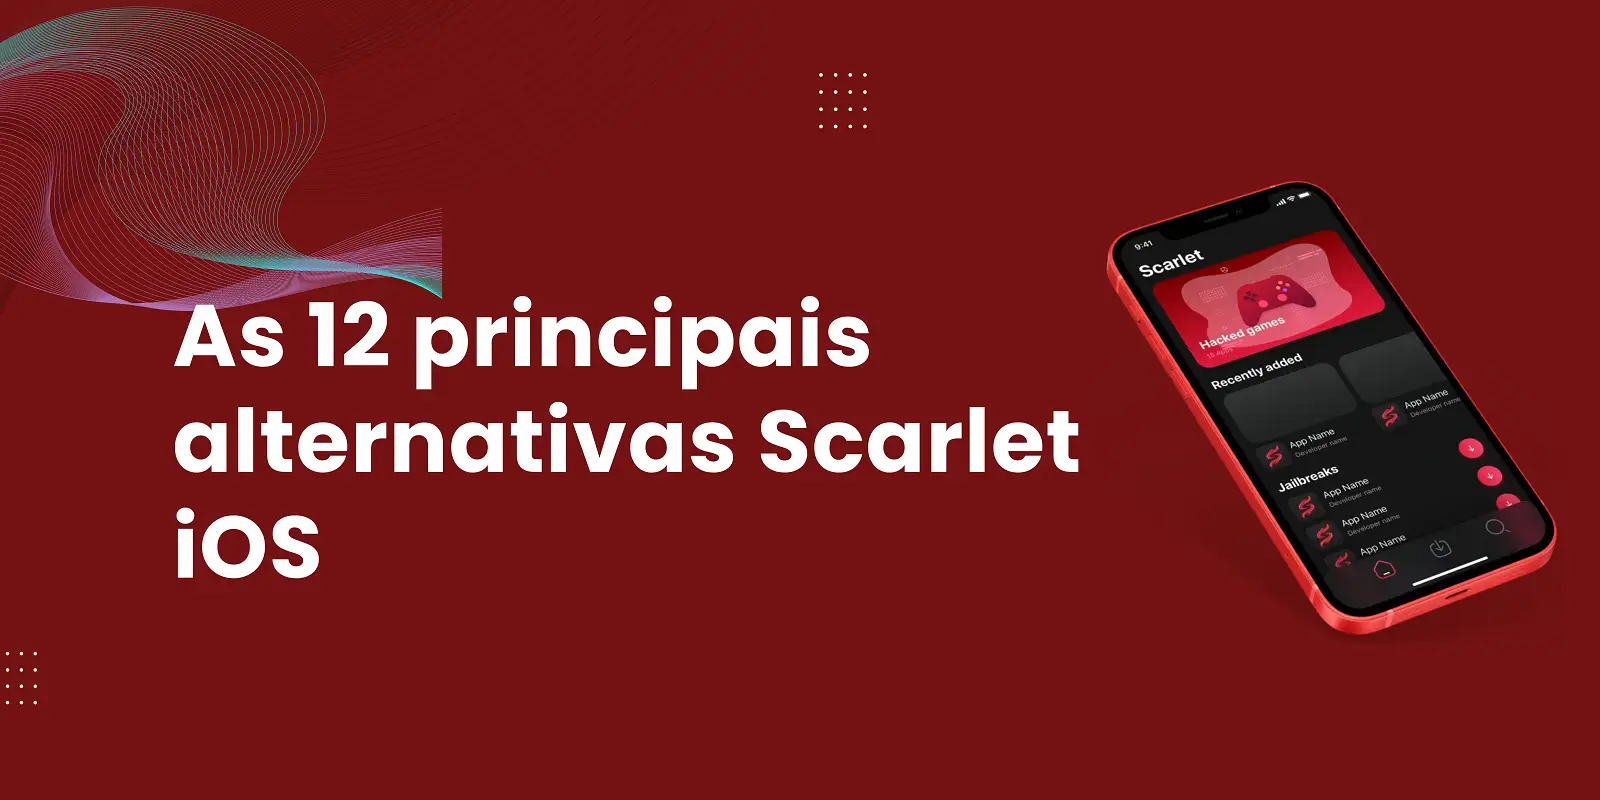 As 12 principais alternativas Scarlet iOS